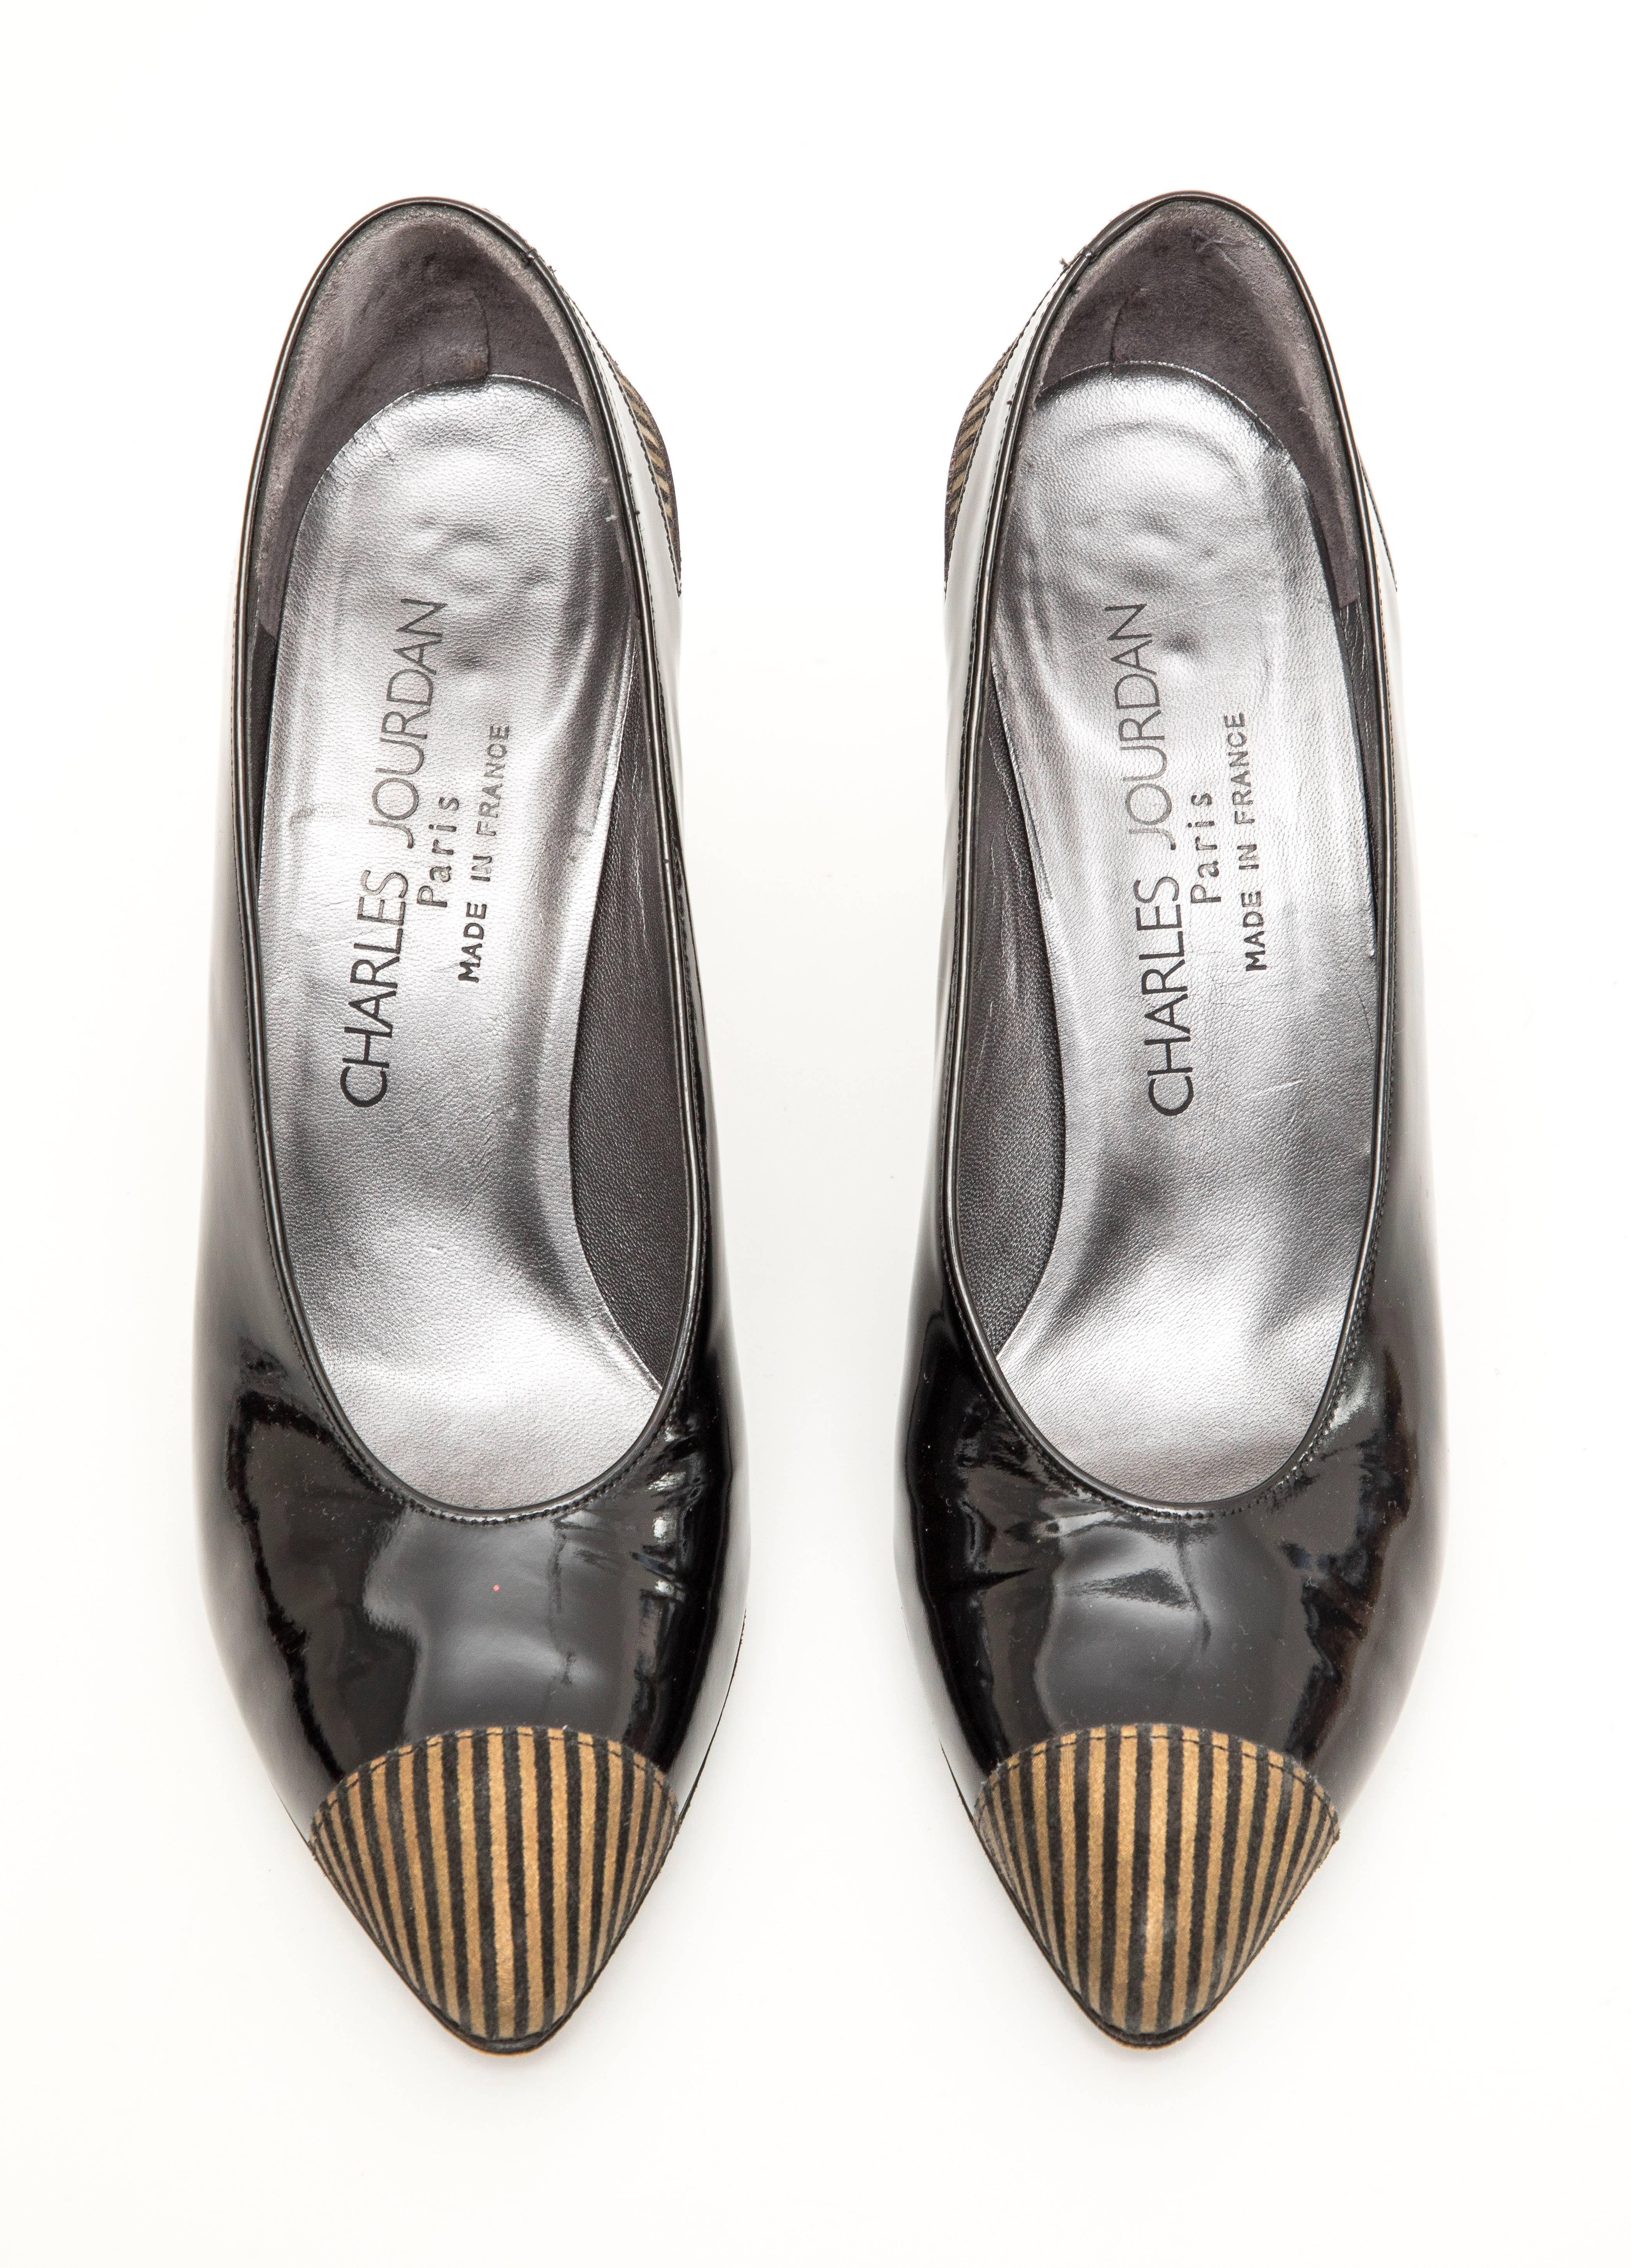 Women's Charles Jourdan Black Patent Leather Striped Silk Faille Cone Heels, Circa 1980s